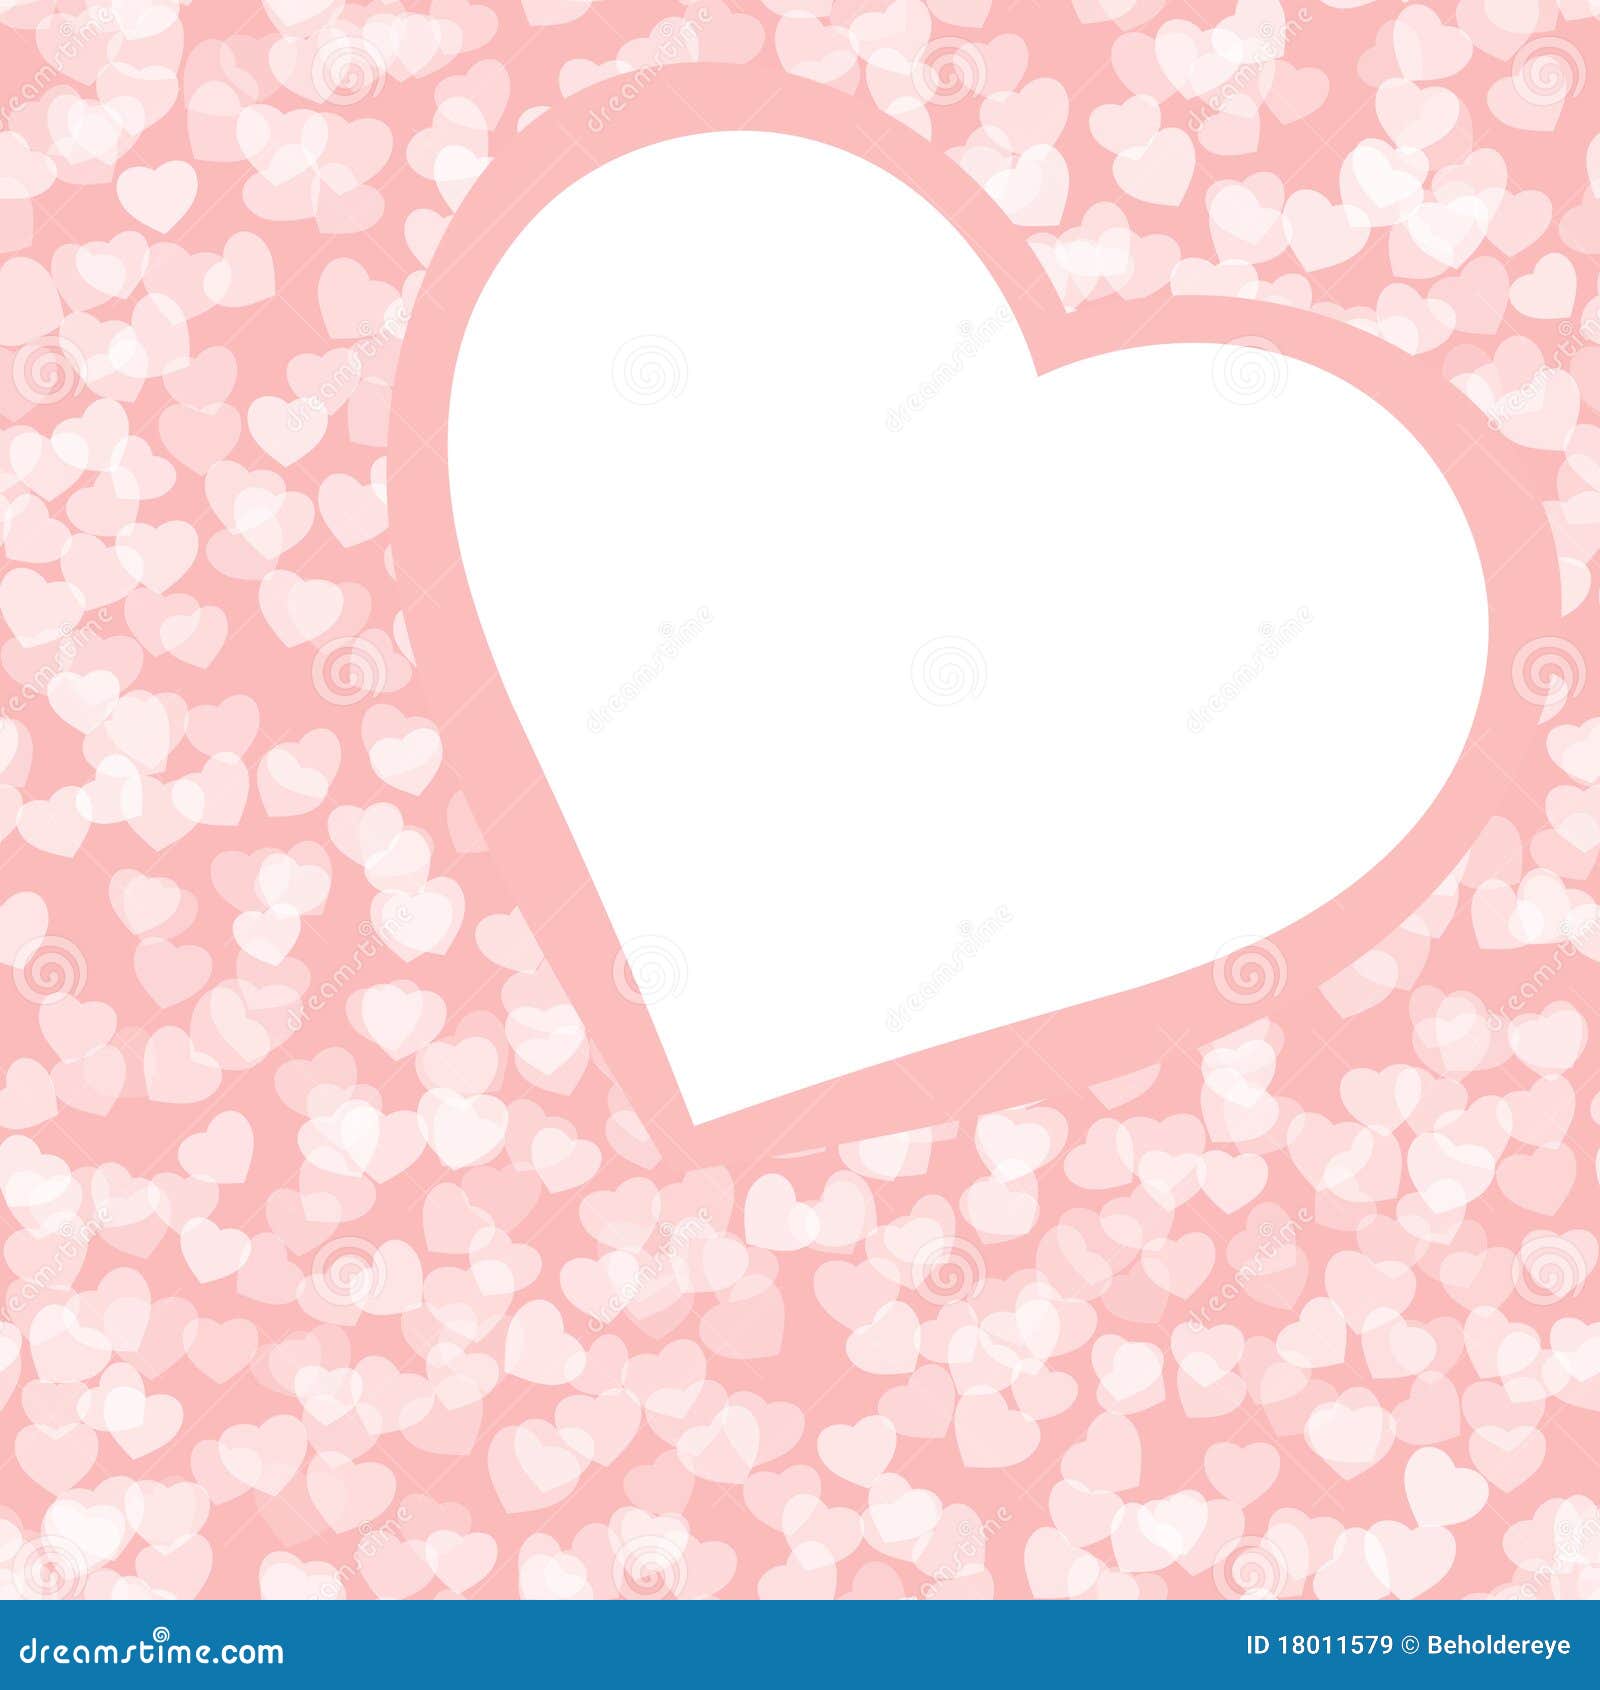 Romantic Valentine Background Template Stock Vector - Illustration of clip, beautiful ...